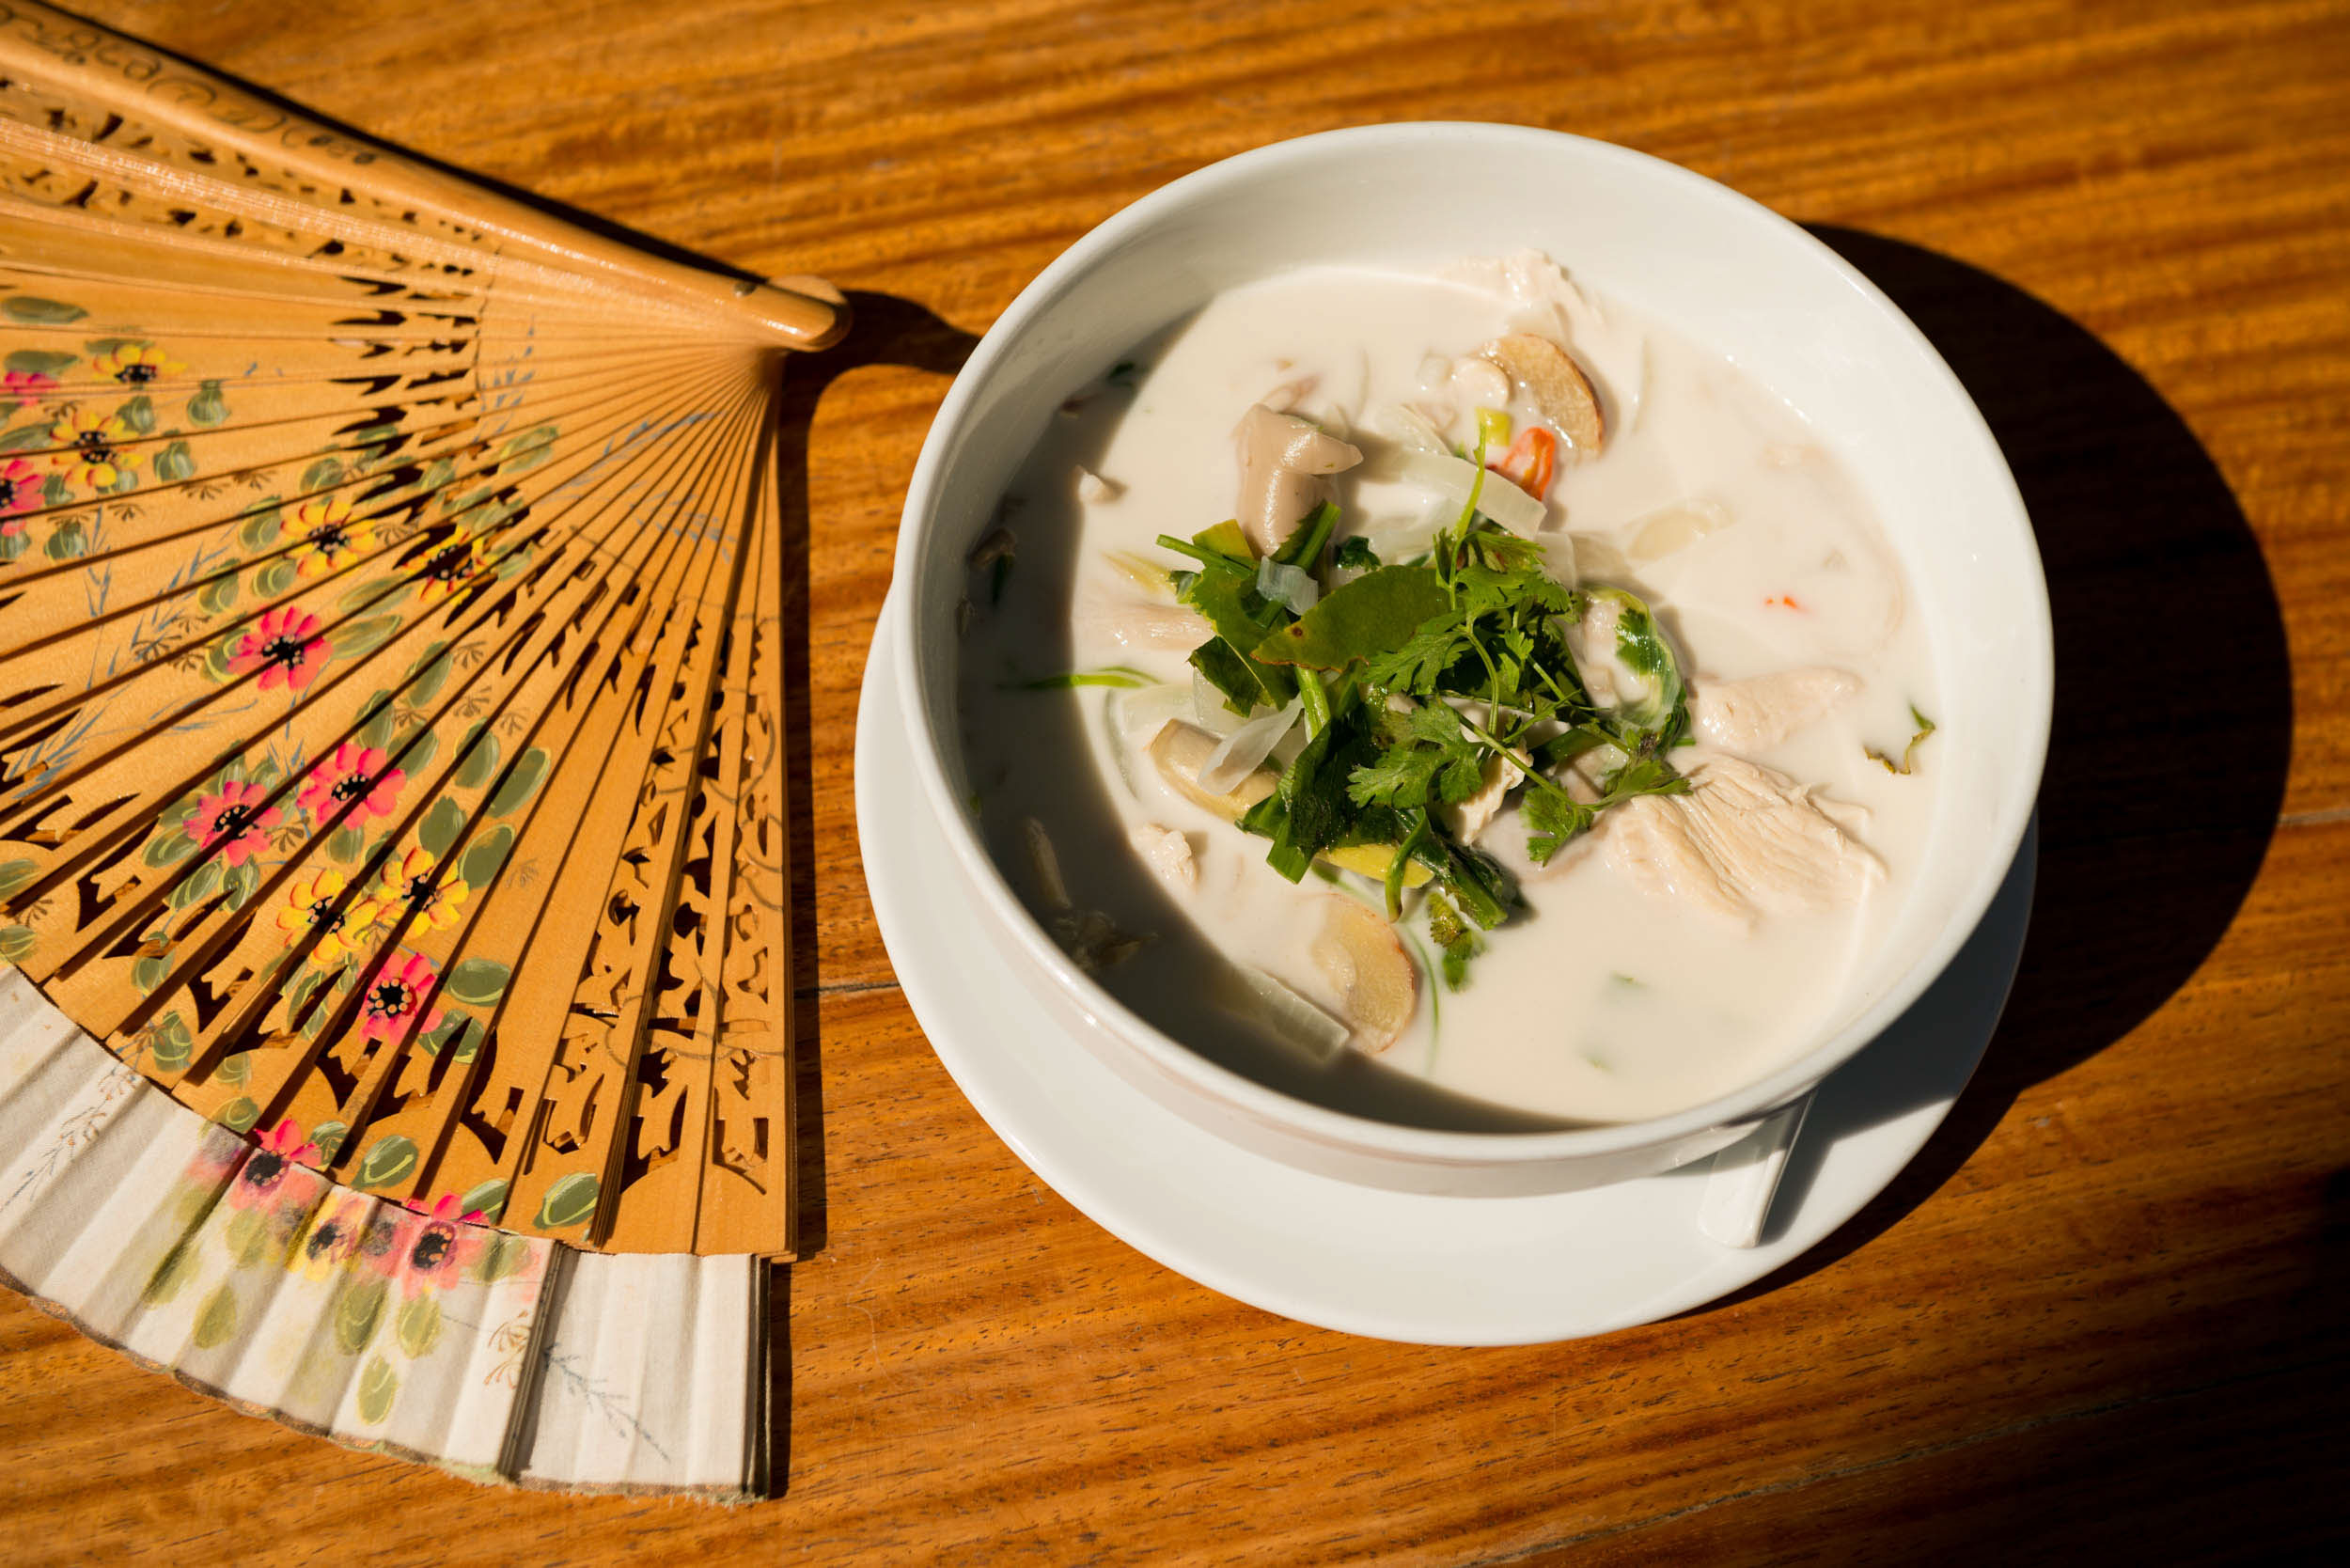 fan-plate-dish-bowl-soup-broth-cuisine-food-luang-prabang-laos-asia